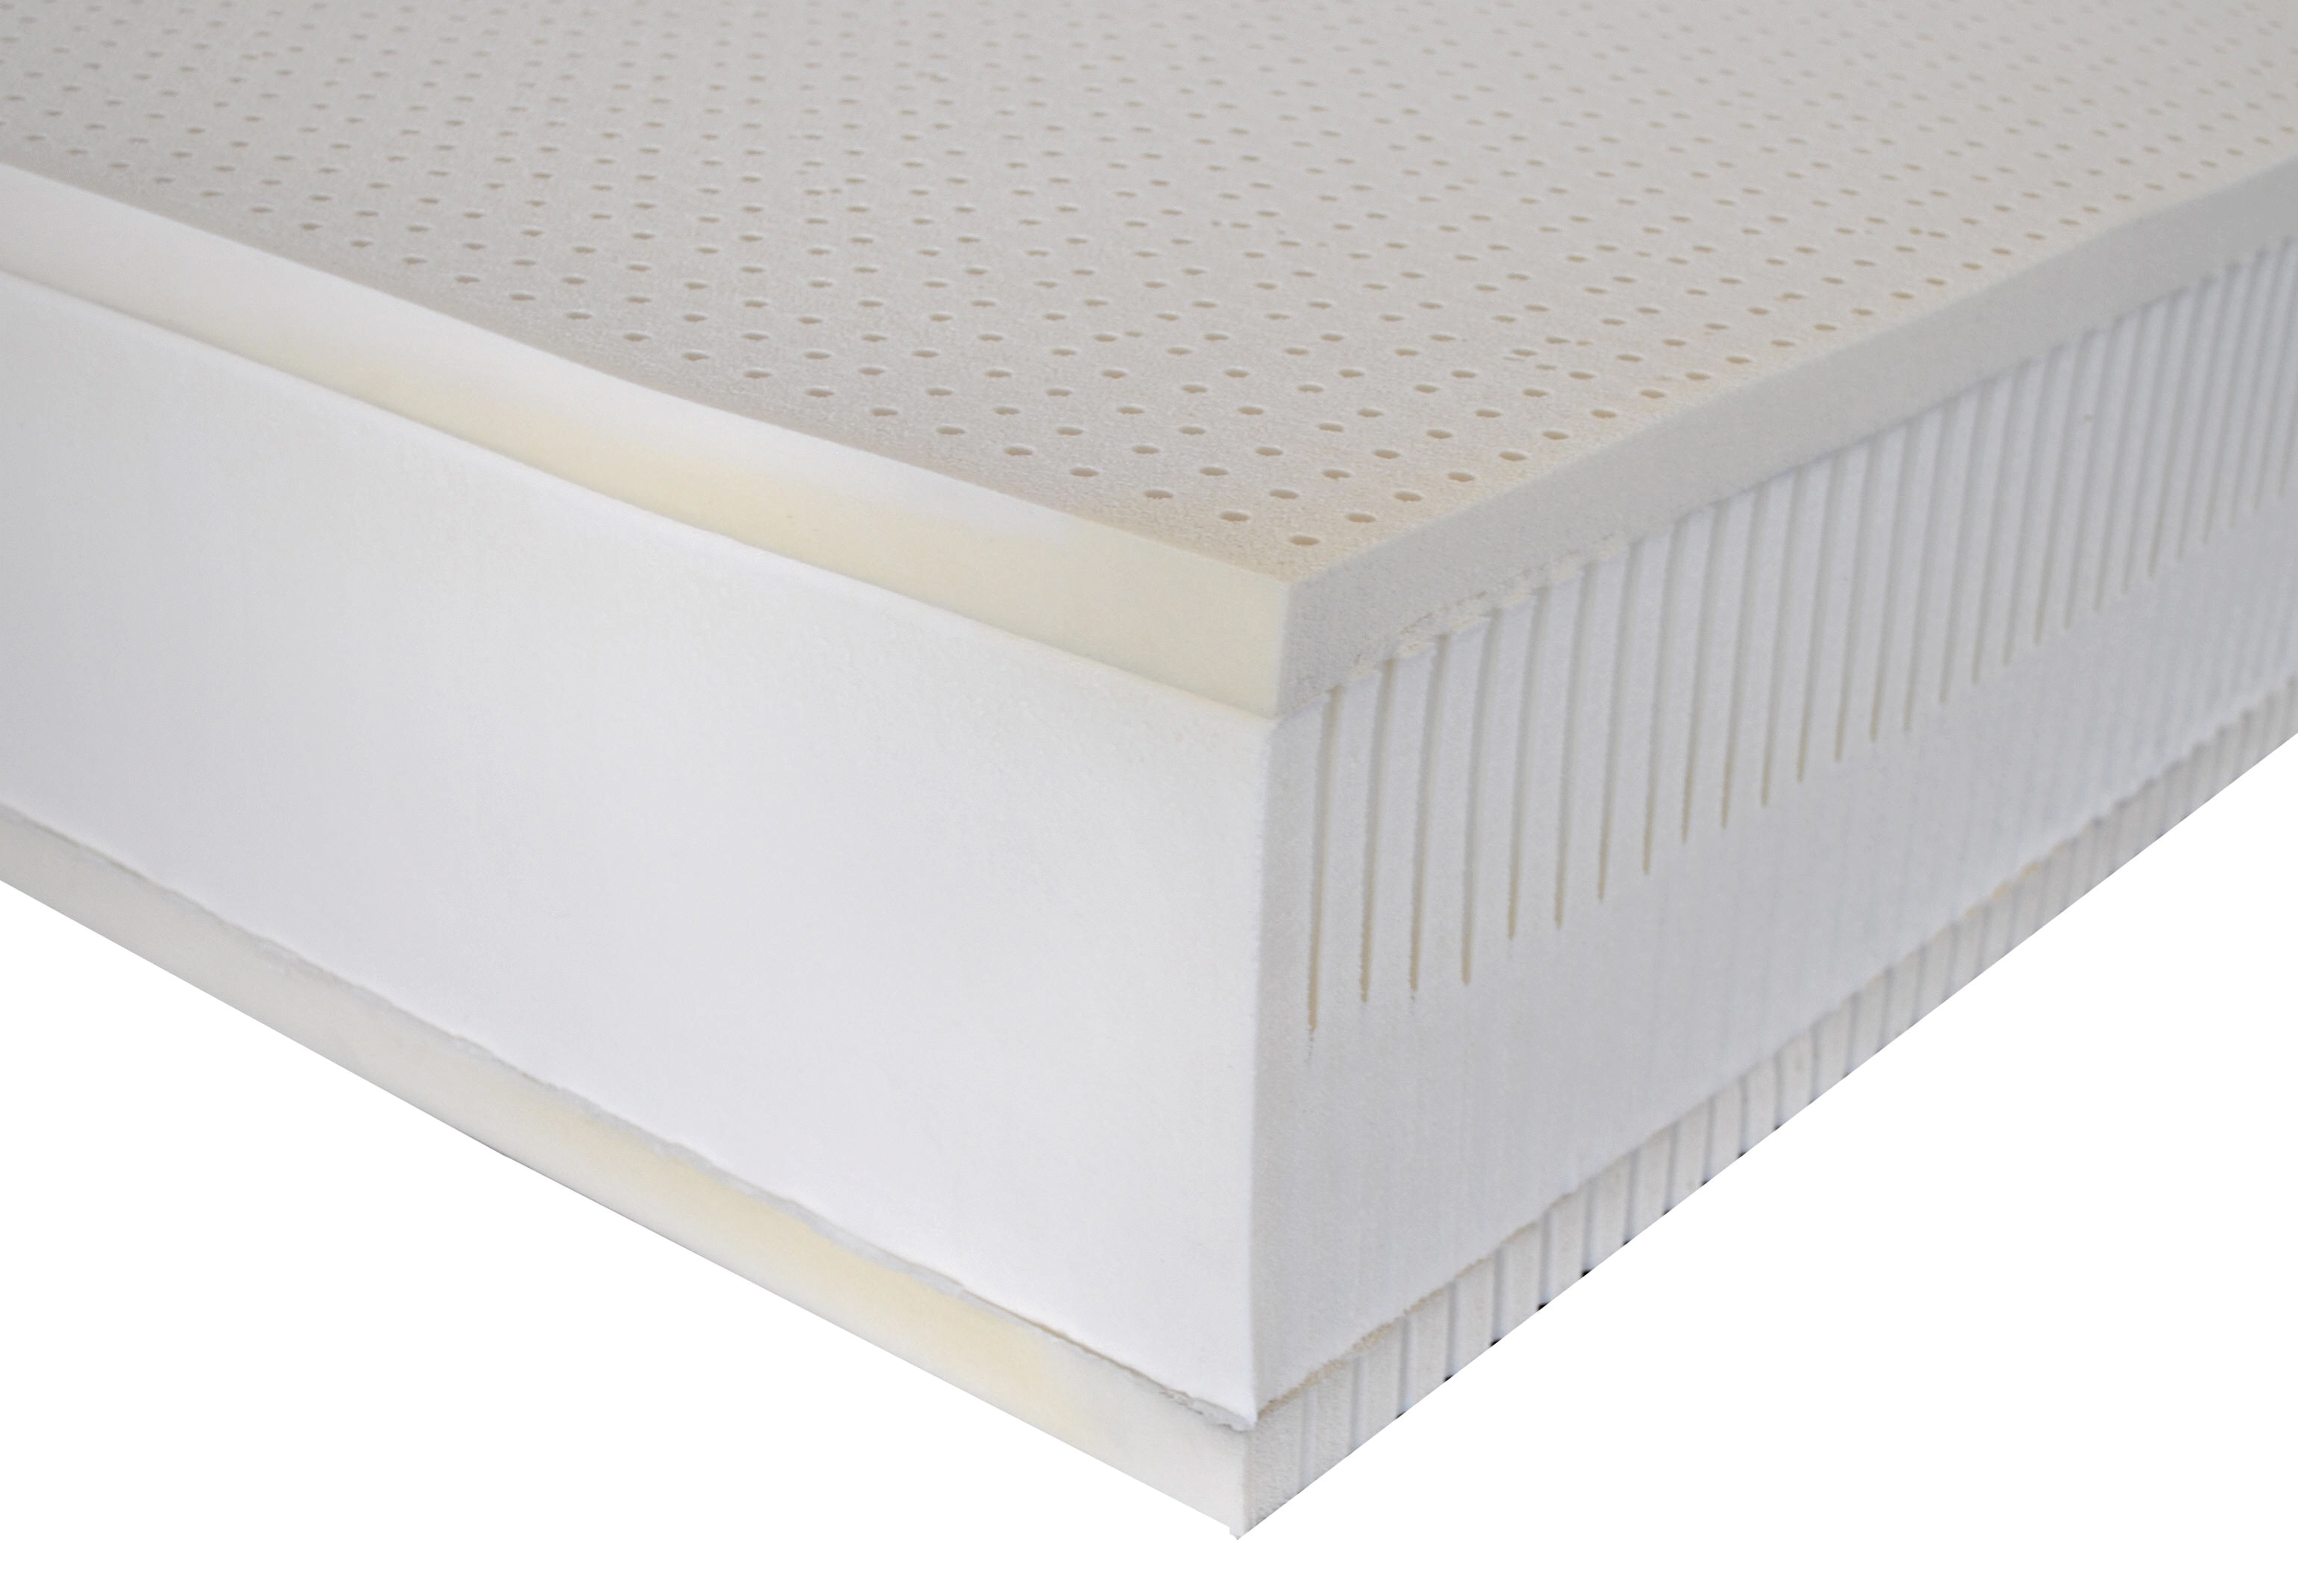 high profile Customer Reviews Ratings Consumer Reports latex mattress